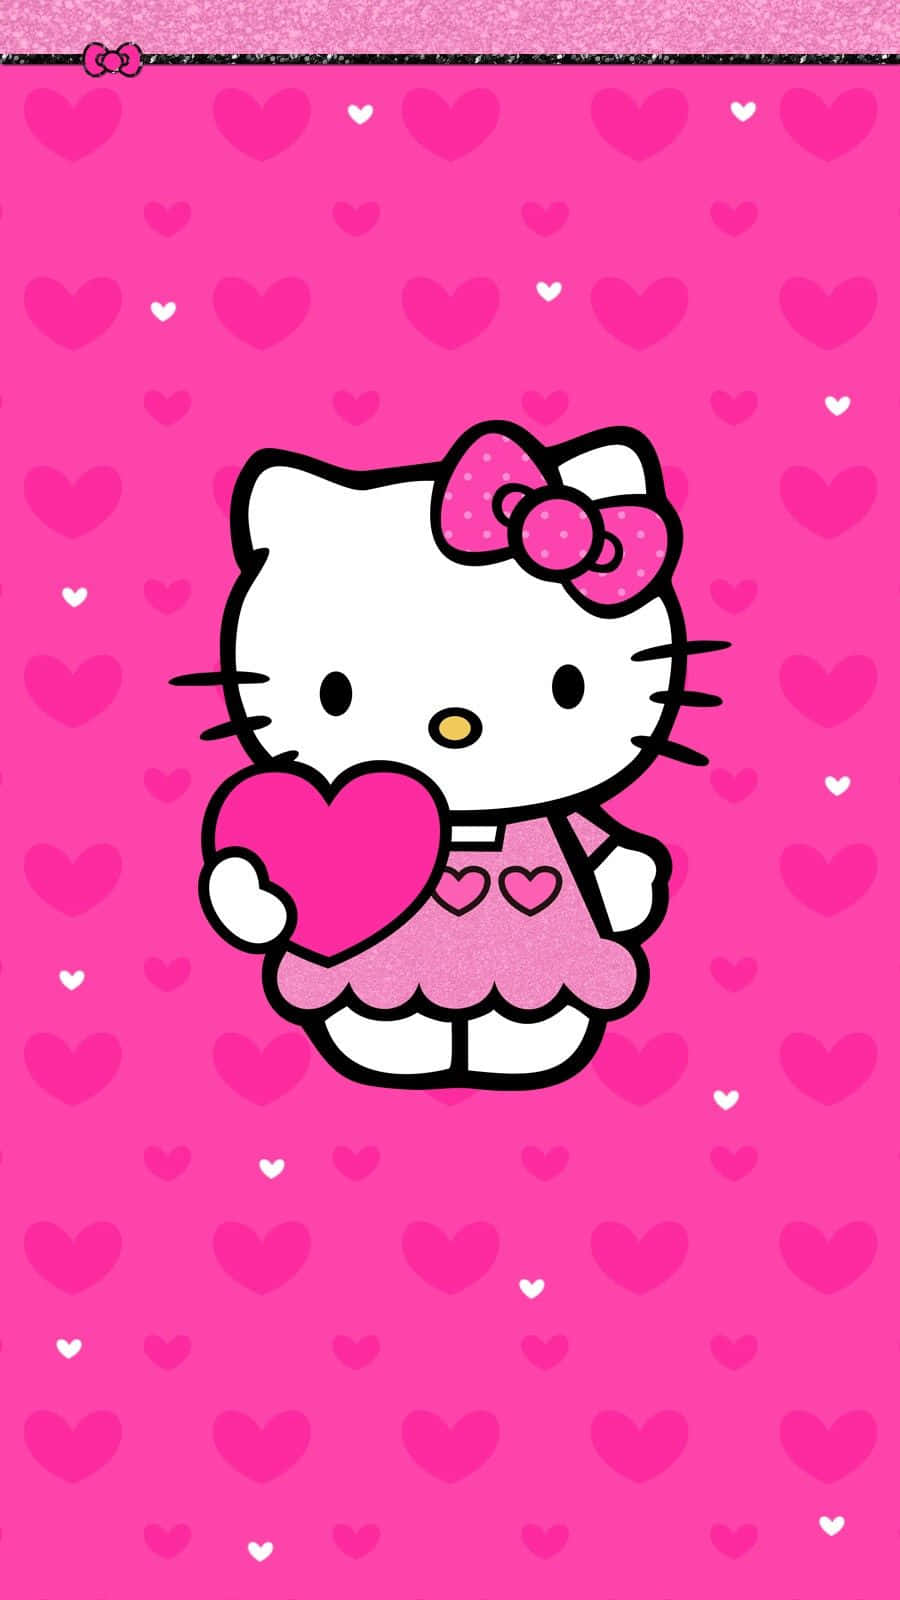 Adorable Kawaii Hello Kitty Wallpaper for Your Phone Wallpaper